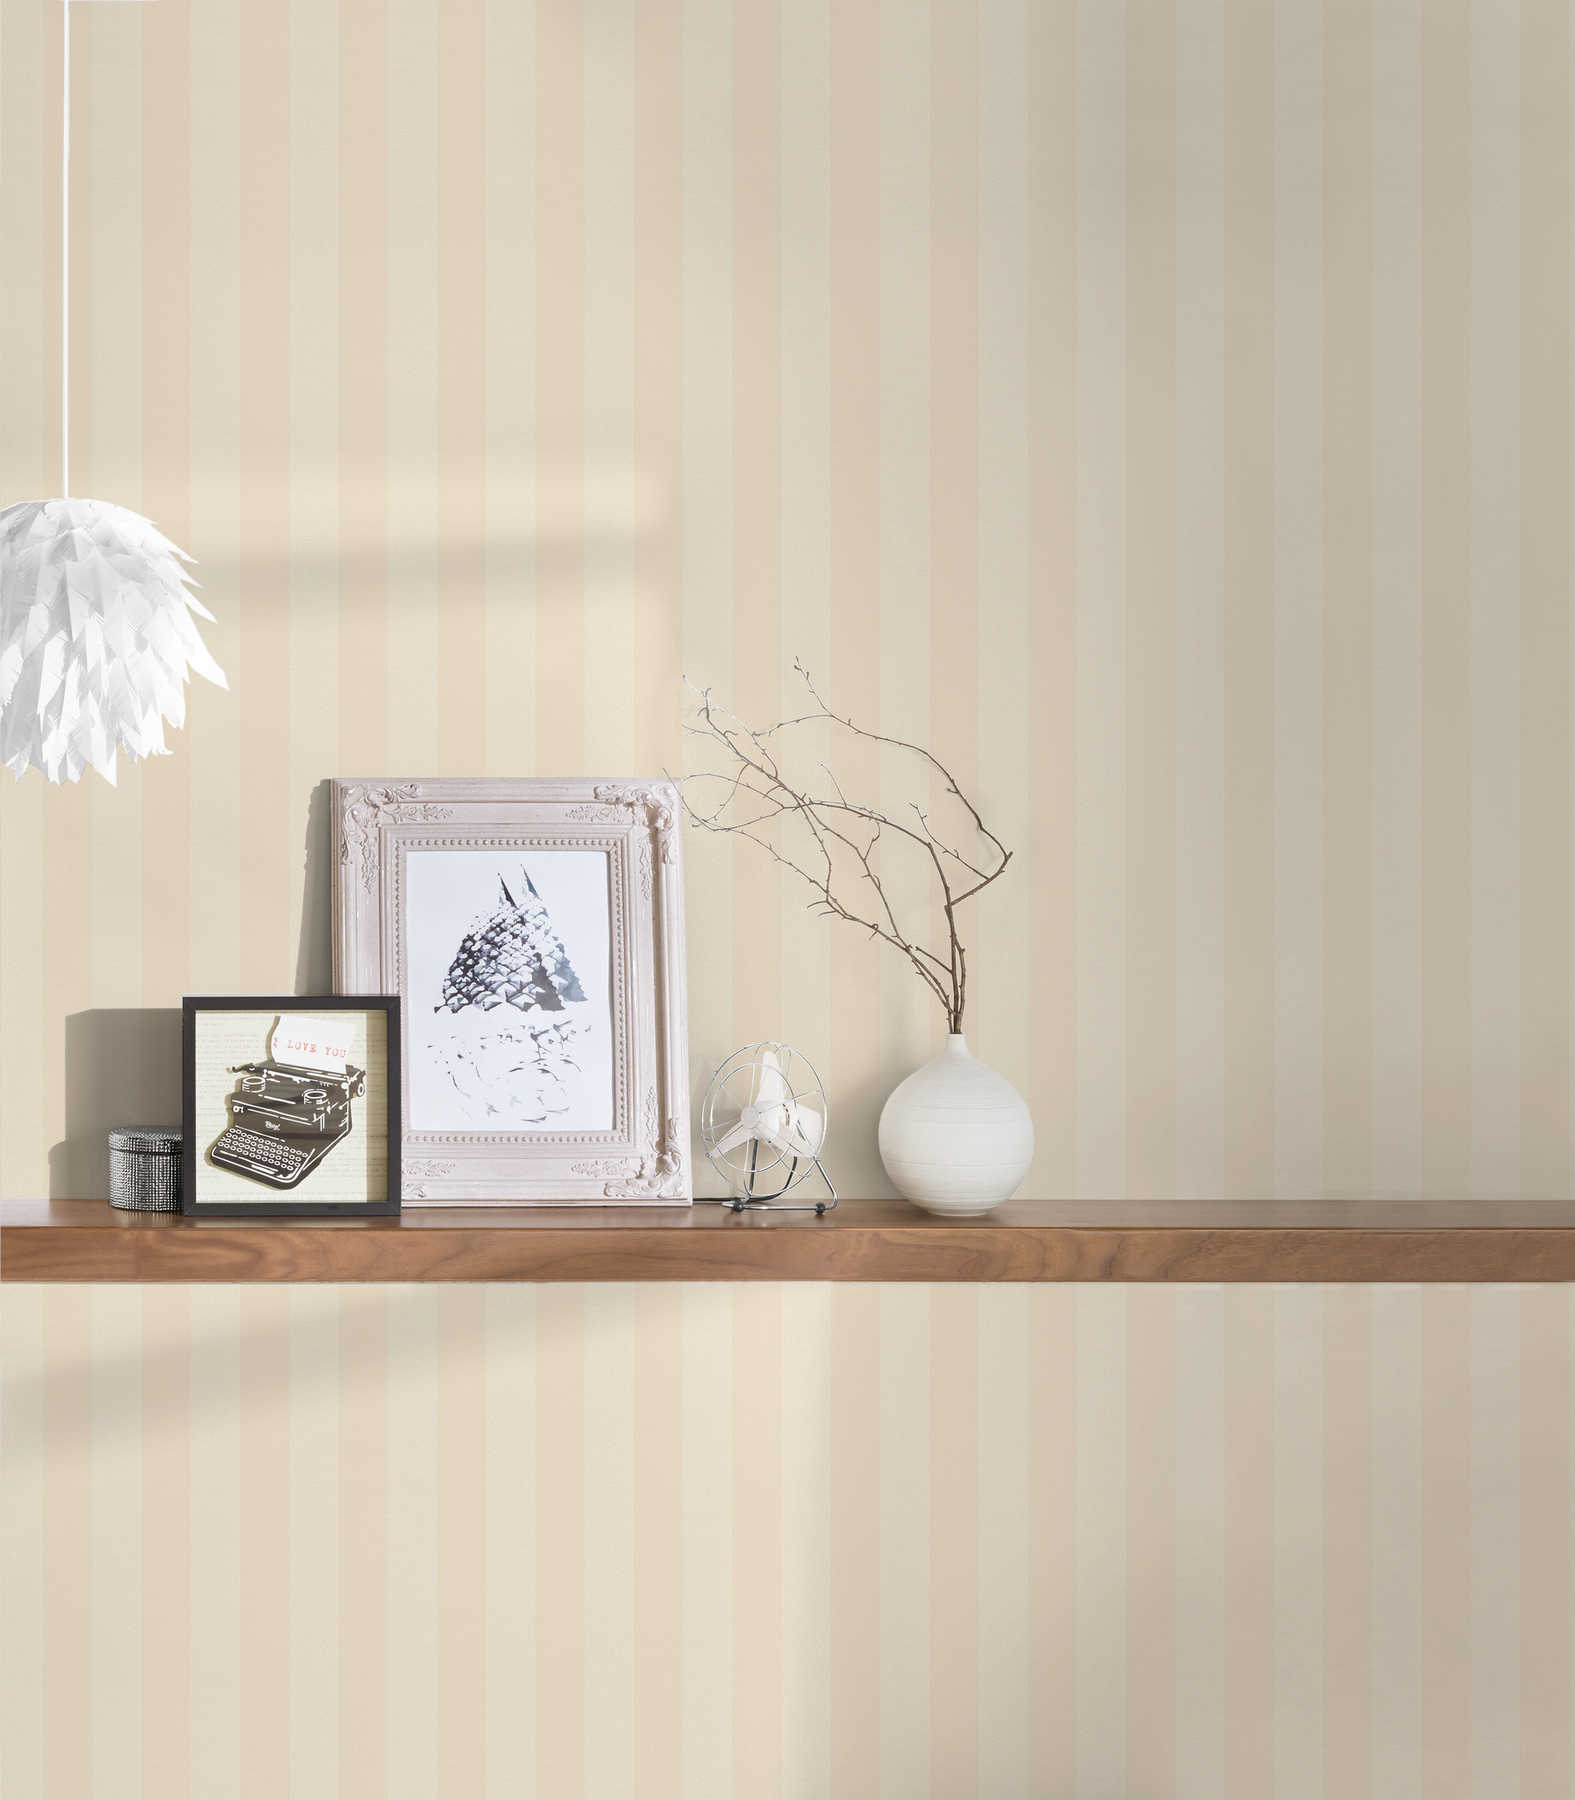             Classic stripe wallpaper in romantic style - beige
        